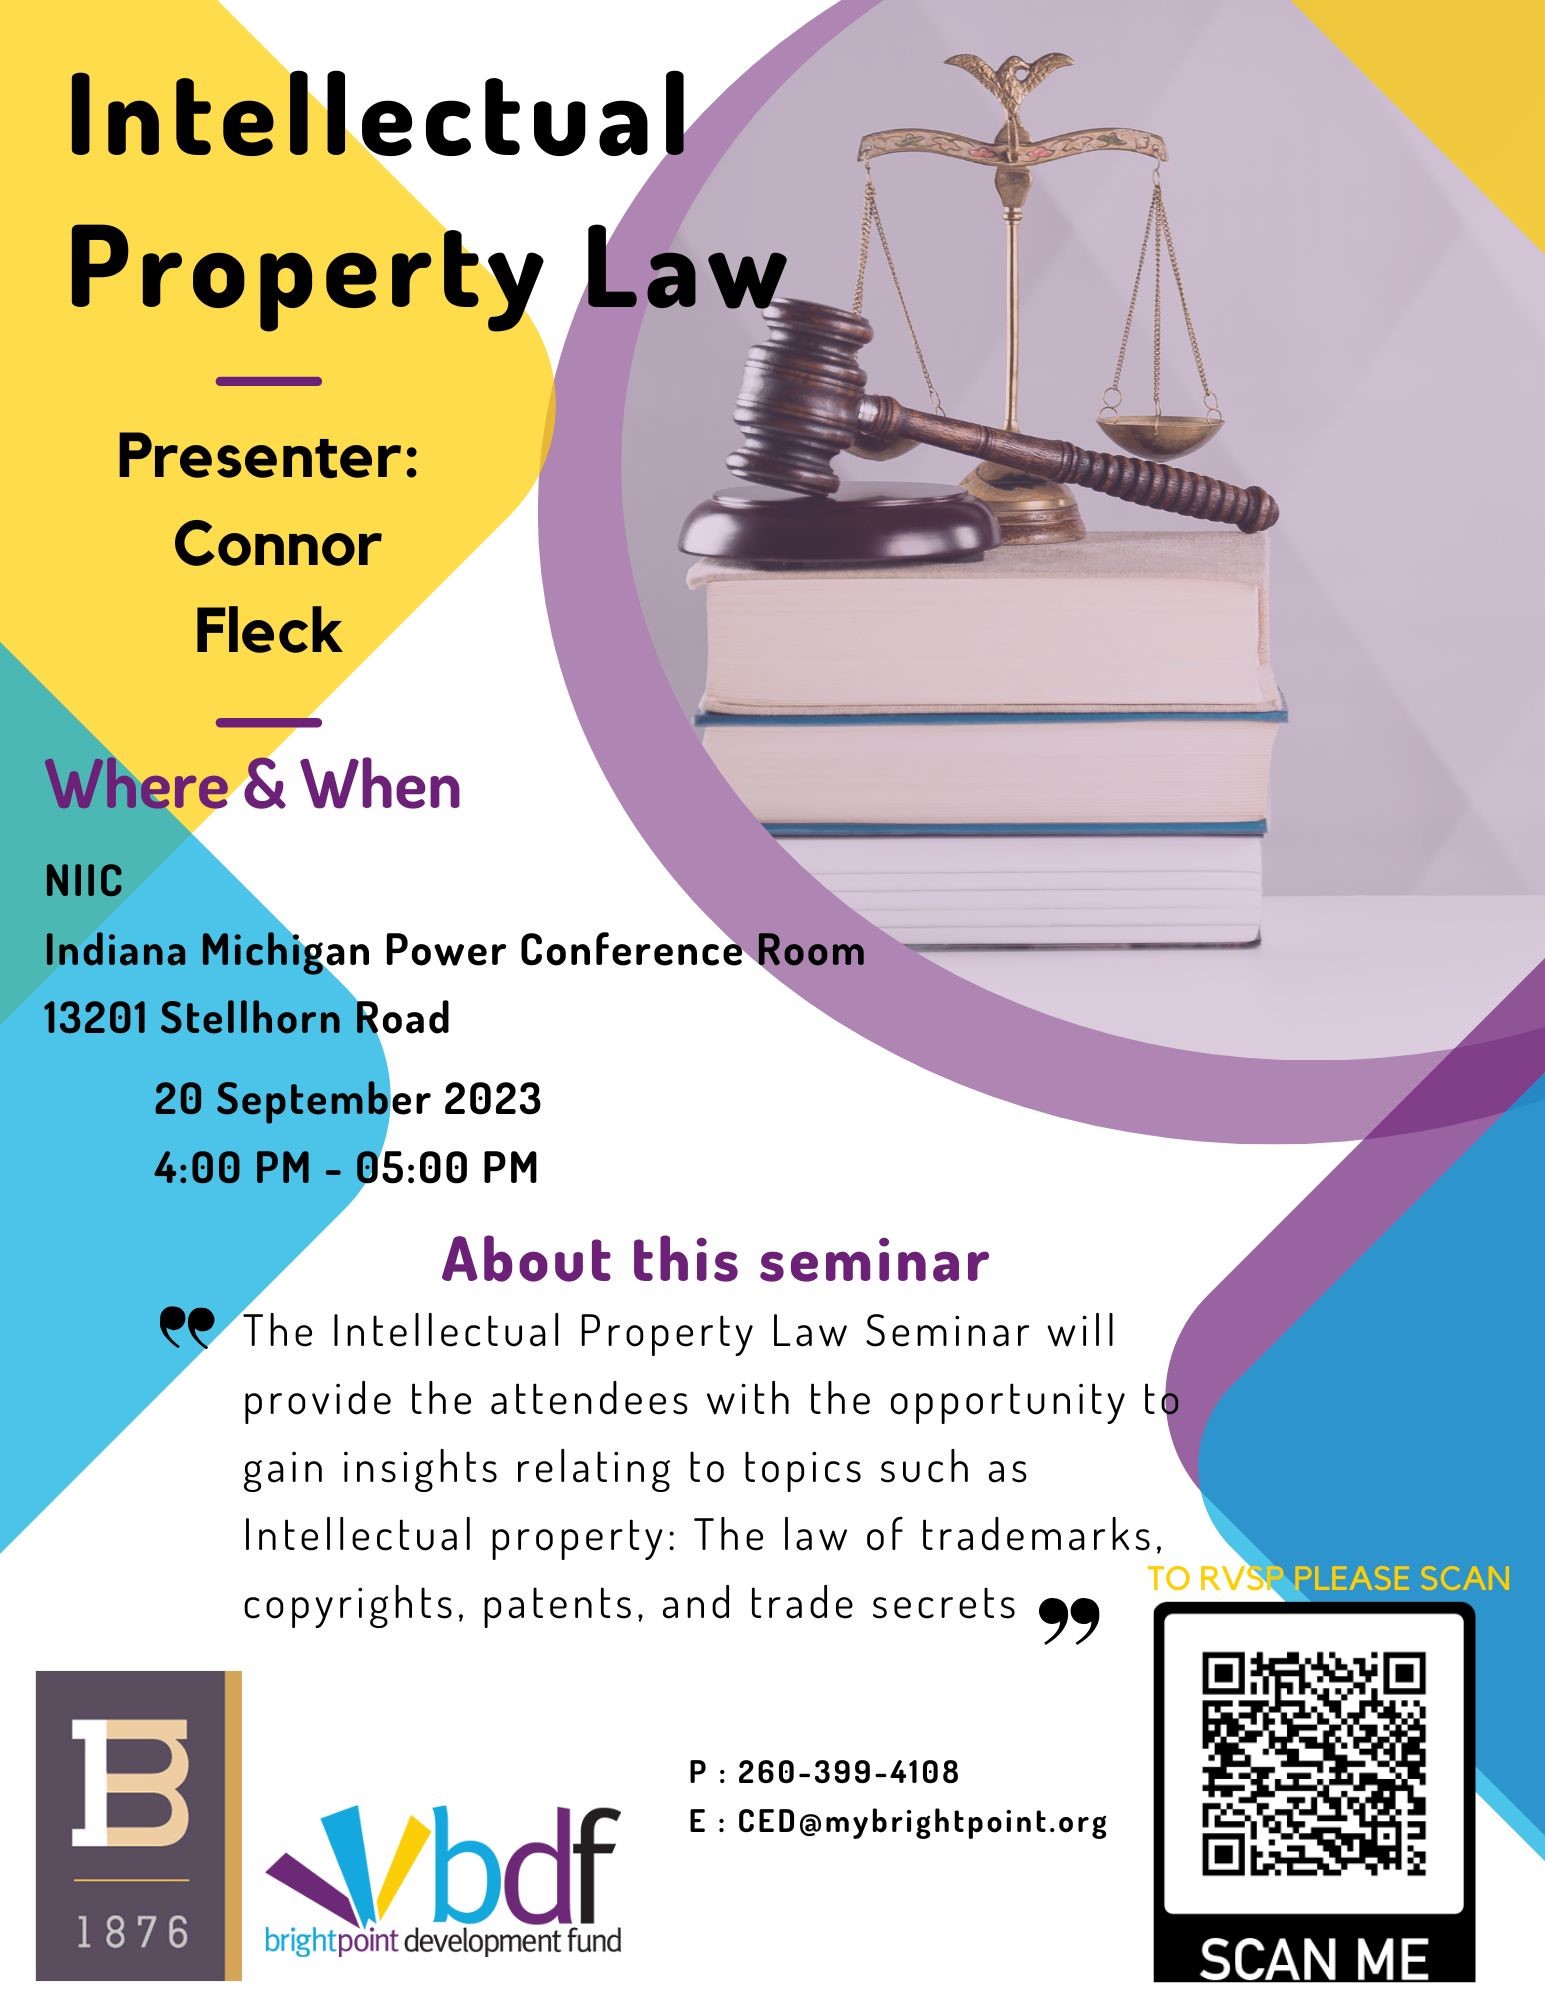 Intellectual Property Law Seminar